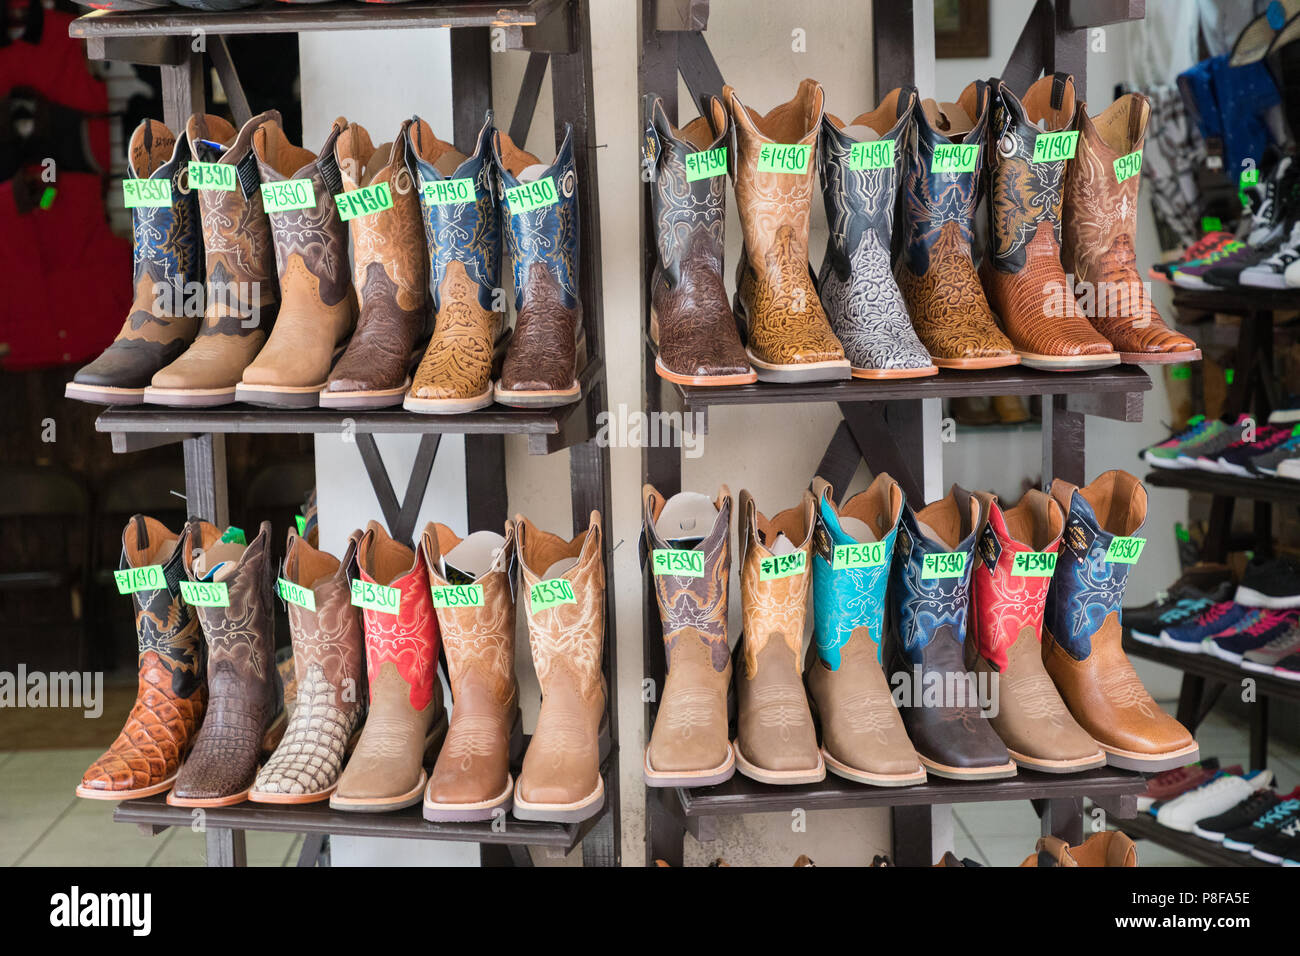 Stivali messicani, Messico Foto stock - Alamy